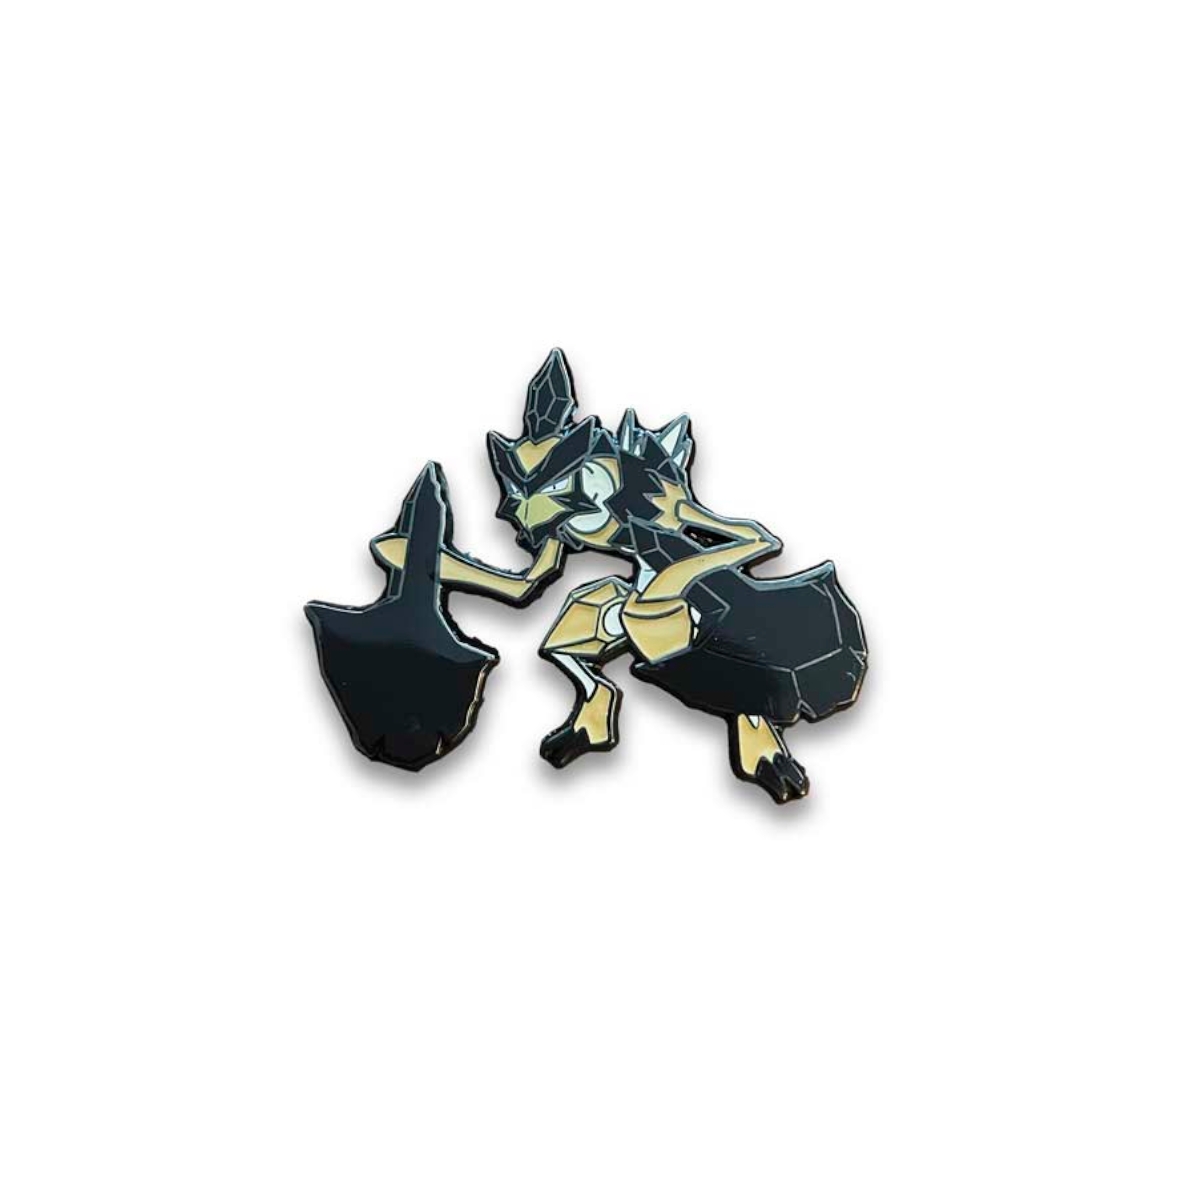 Pokémon - Kleavor VSTAR Premium Collection